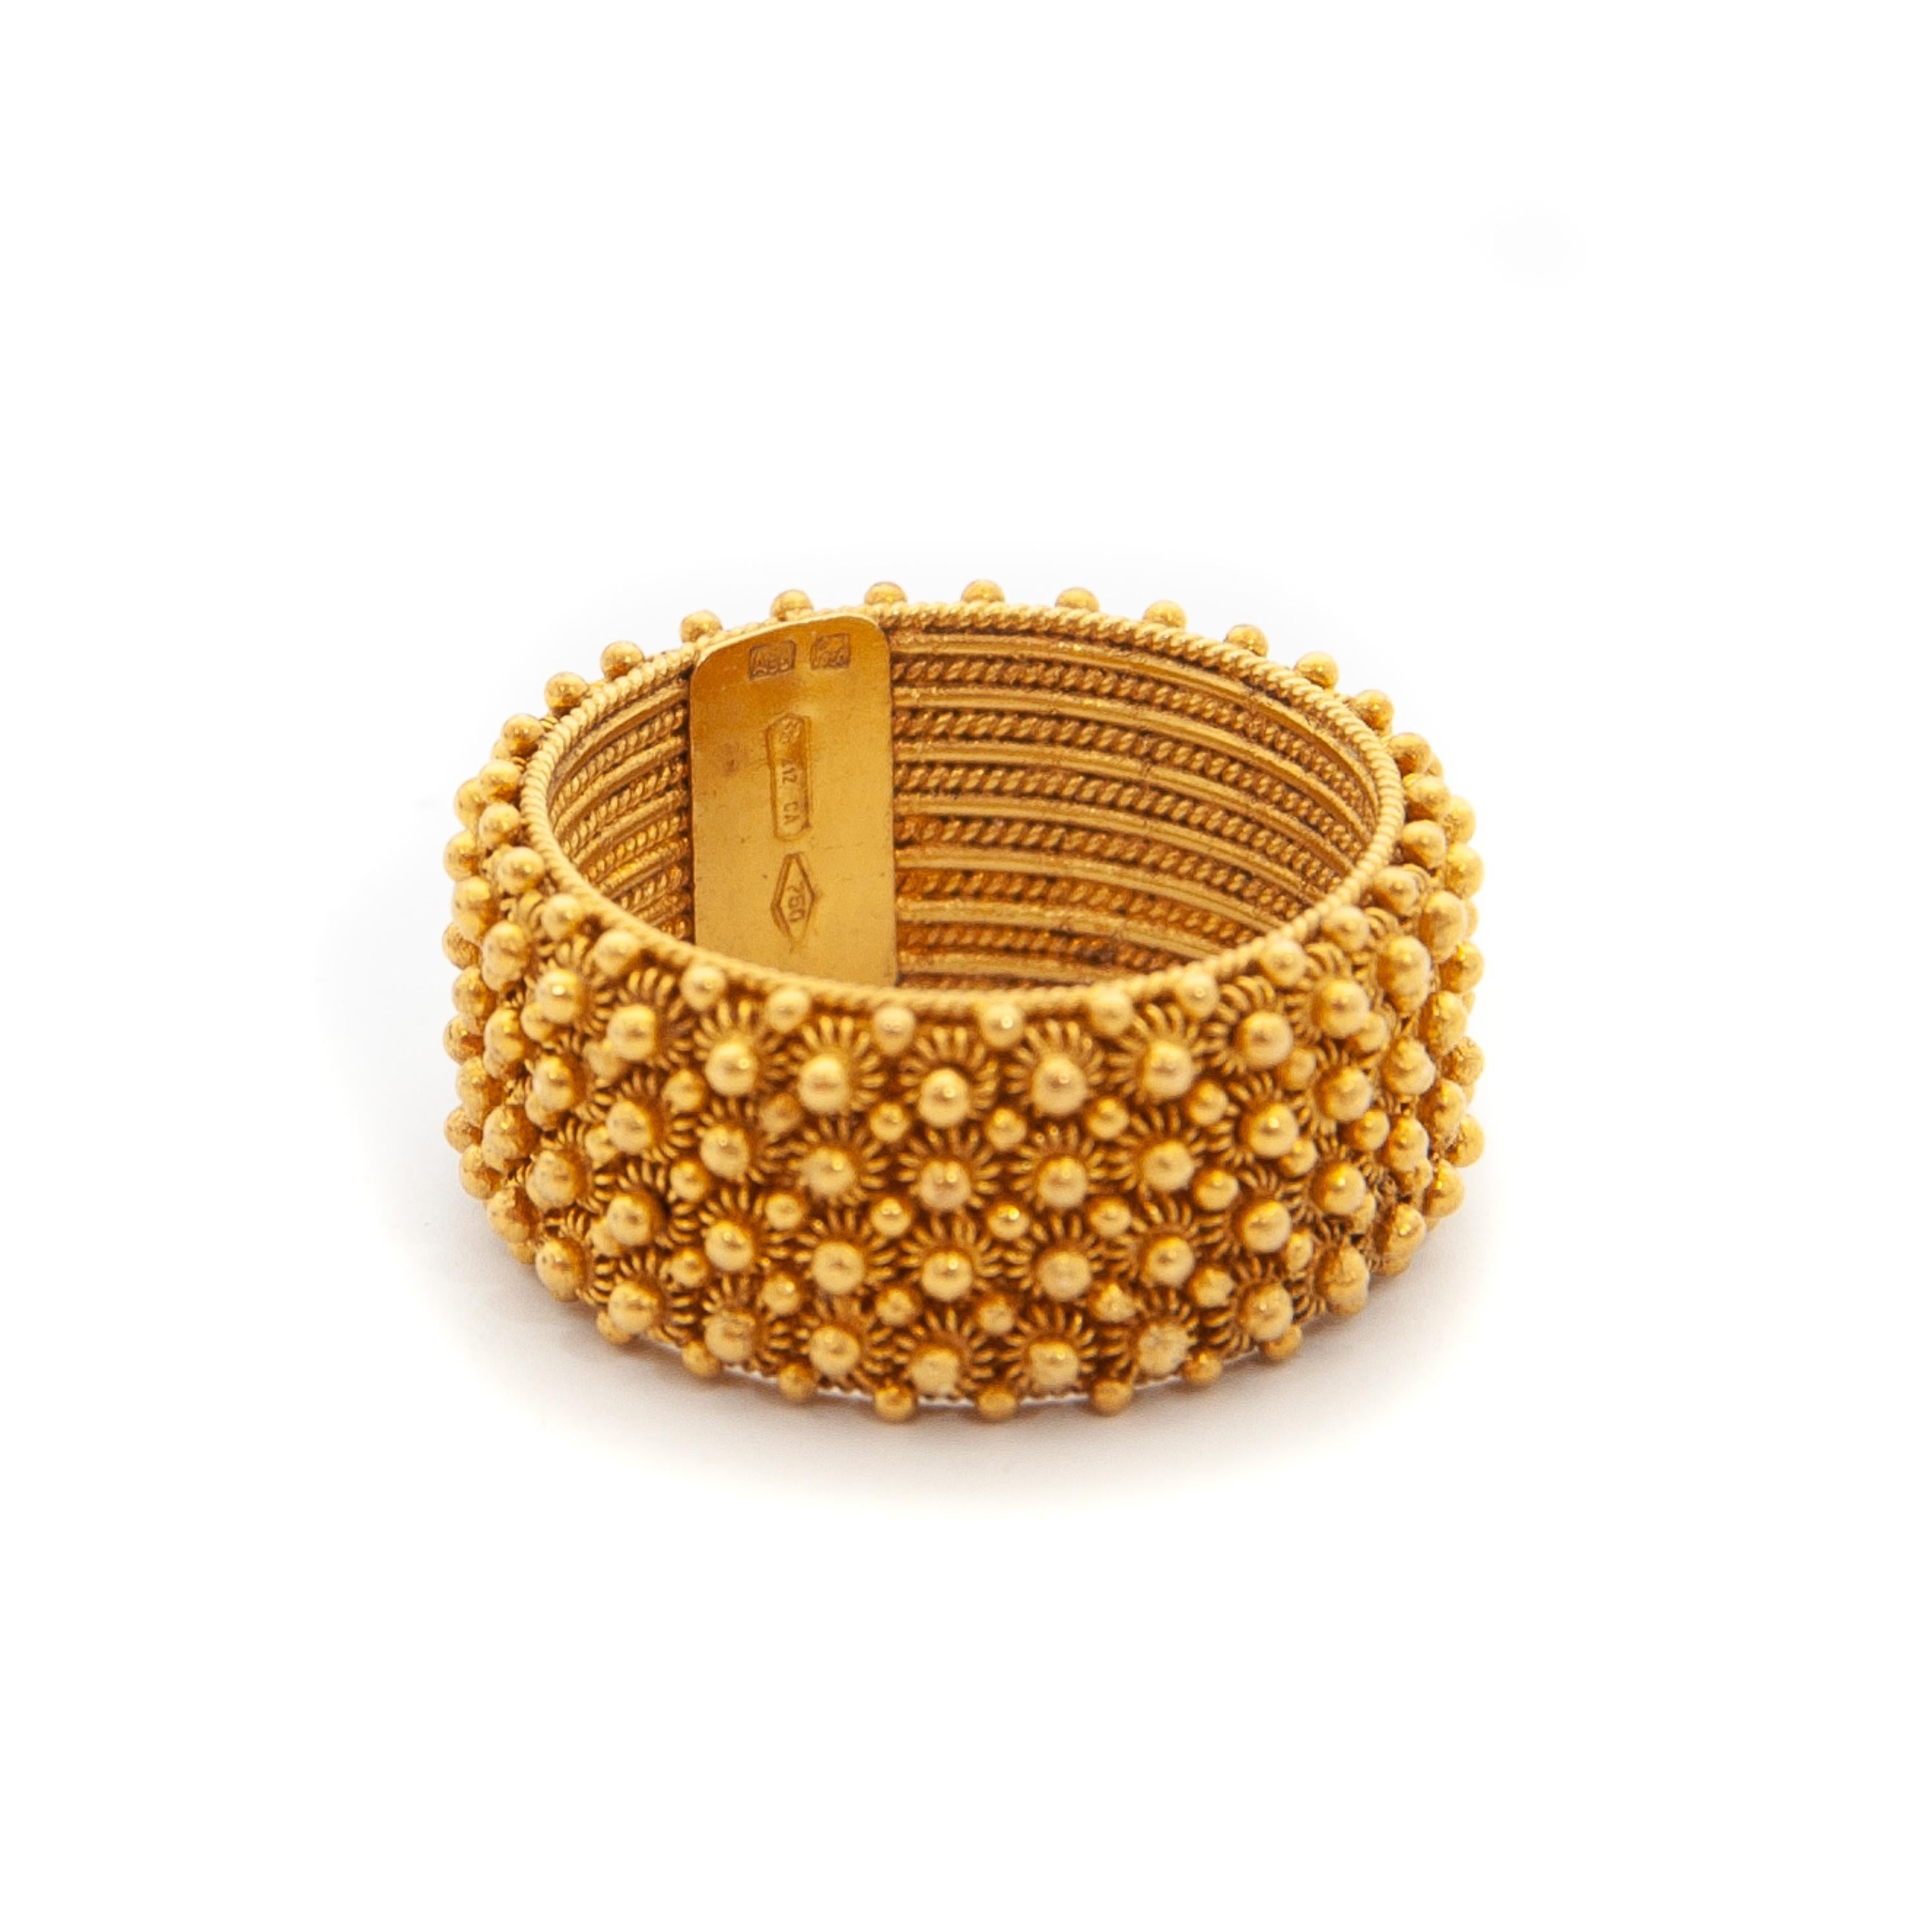 Etruscan Revival 18K Gold Cannetille Band Ring 2